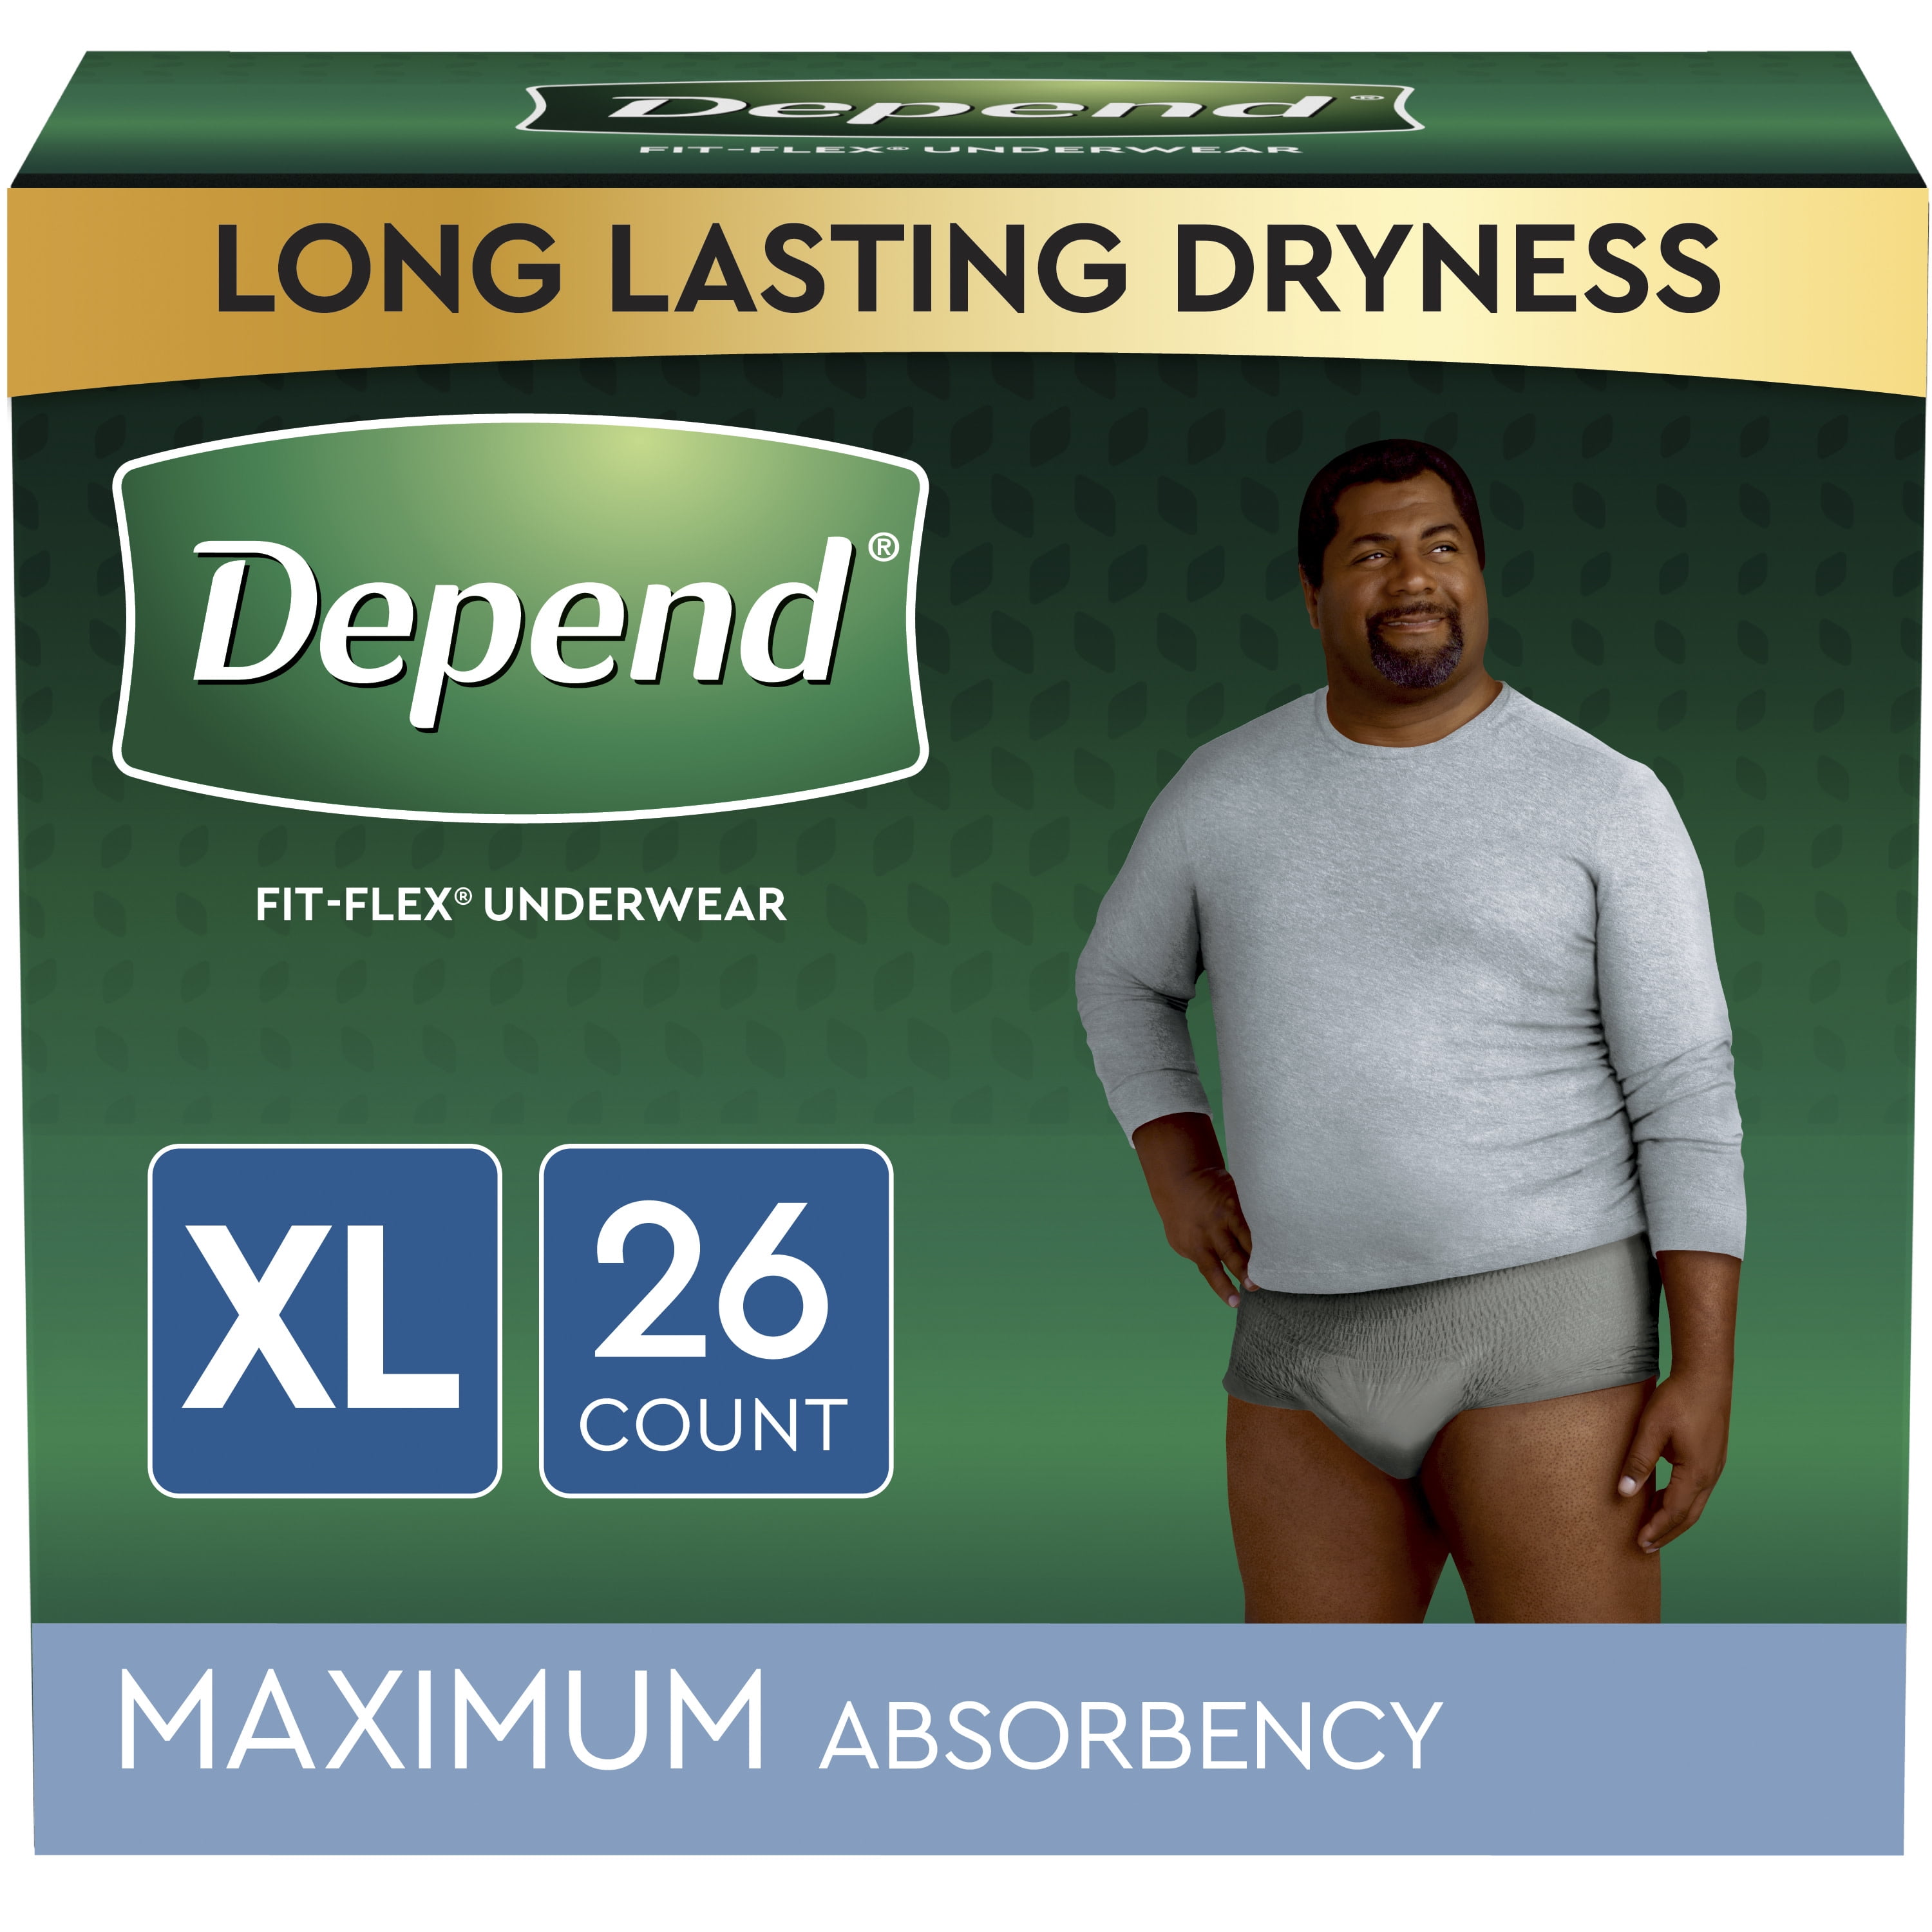 Assurance Men's Incontinence Underwear, Maximum Absorbency, Small/Medium(20  Count) 